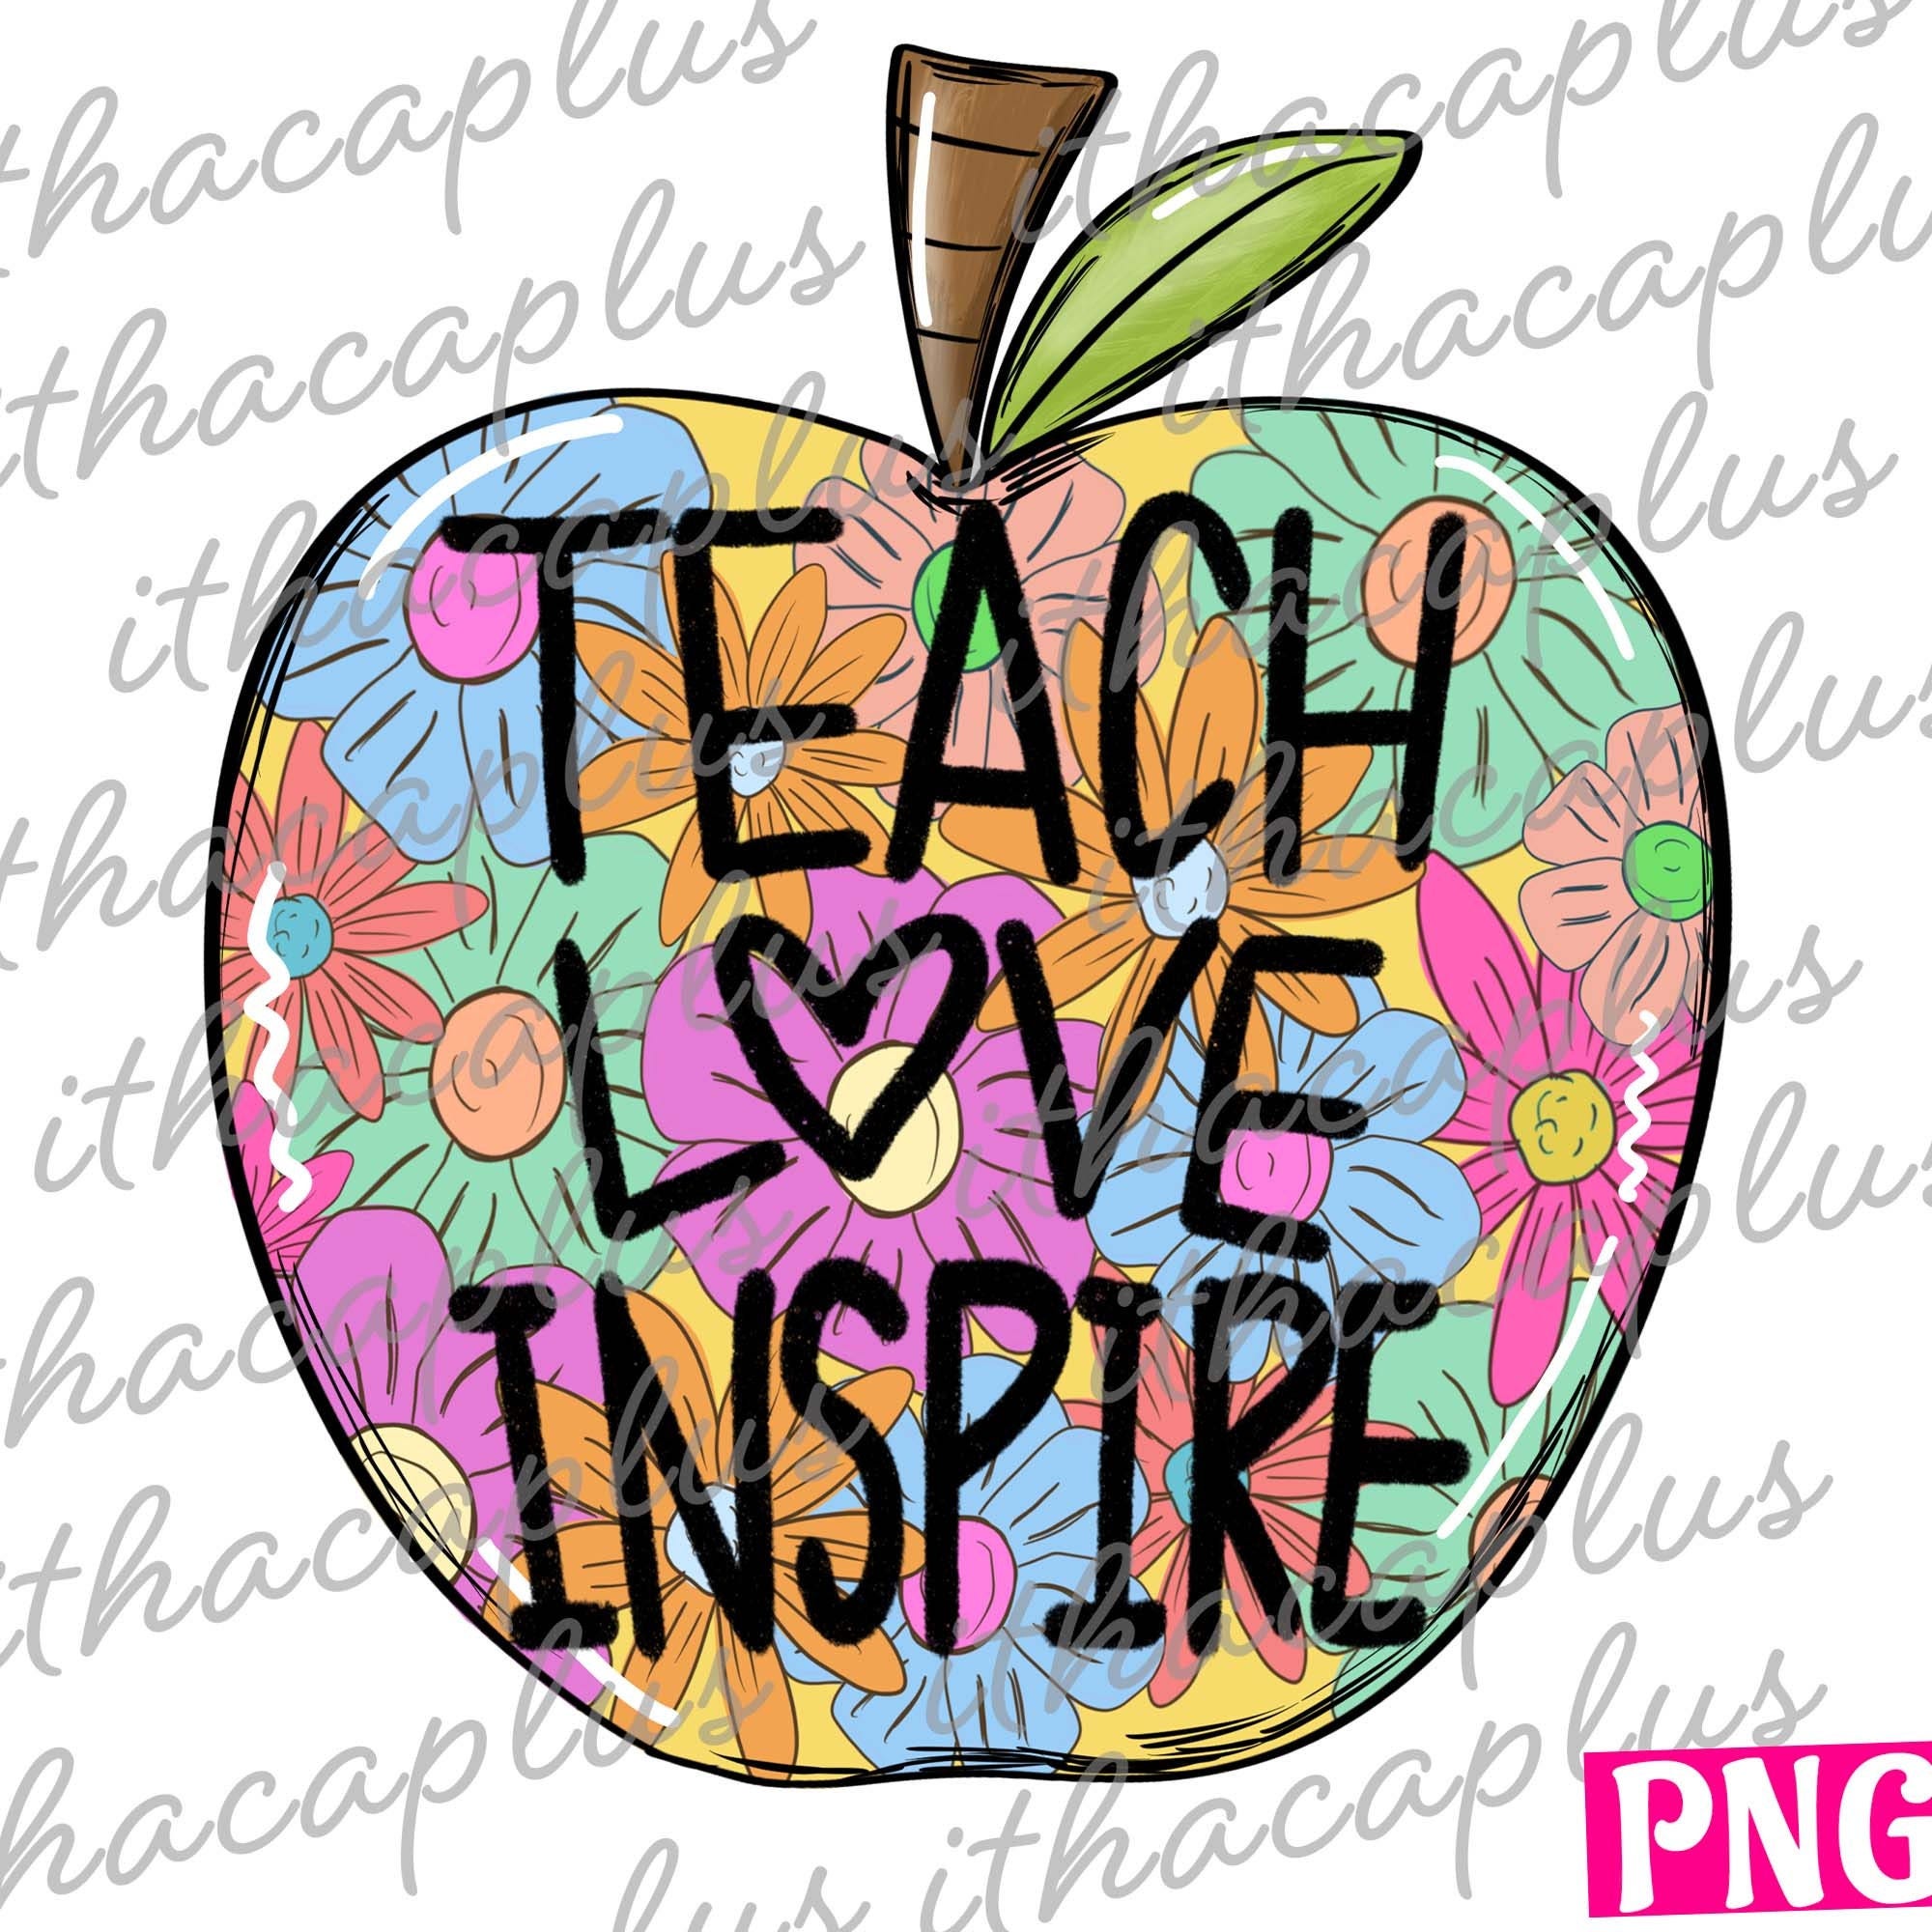 Back To School png, colorful flora apple png, Teacher digital clipart, school printable, Teach love inspire sublimation, retro apple